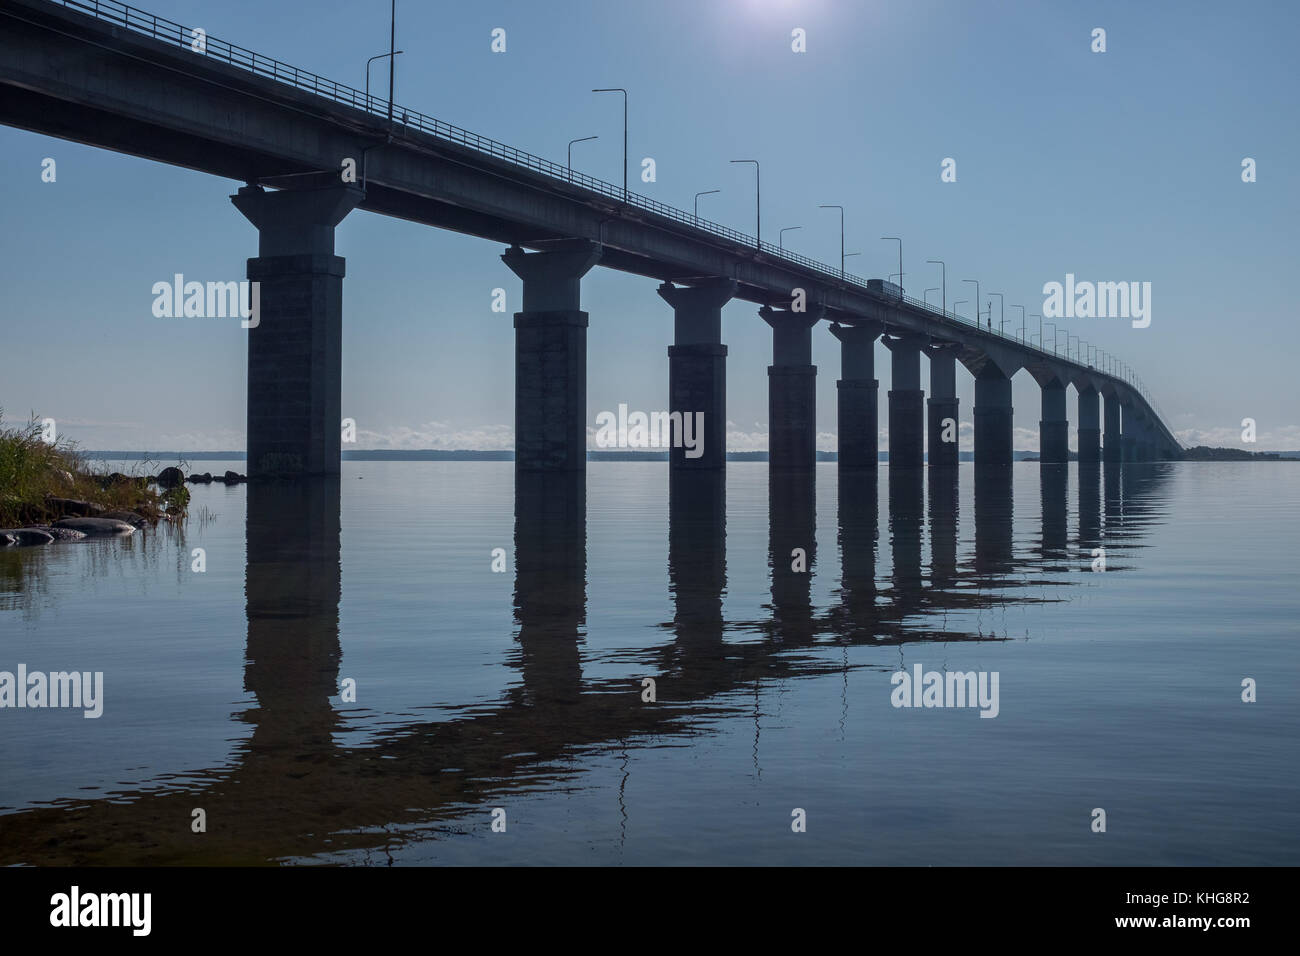 one of Europes longest bridges connecting the island Öland with the city Kalmar Stock Photo